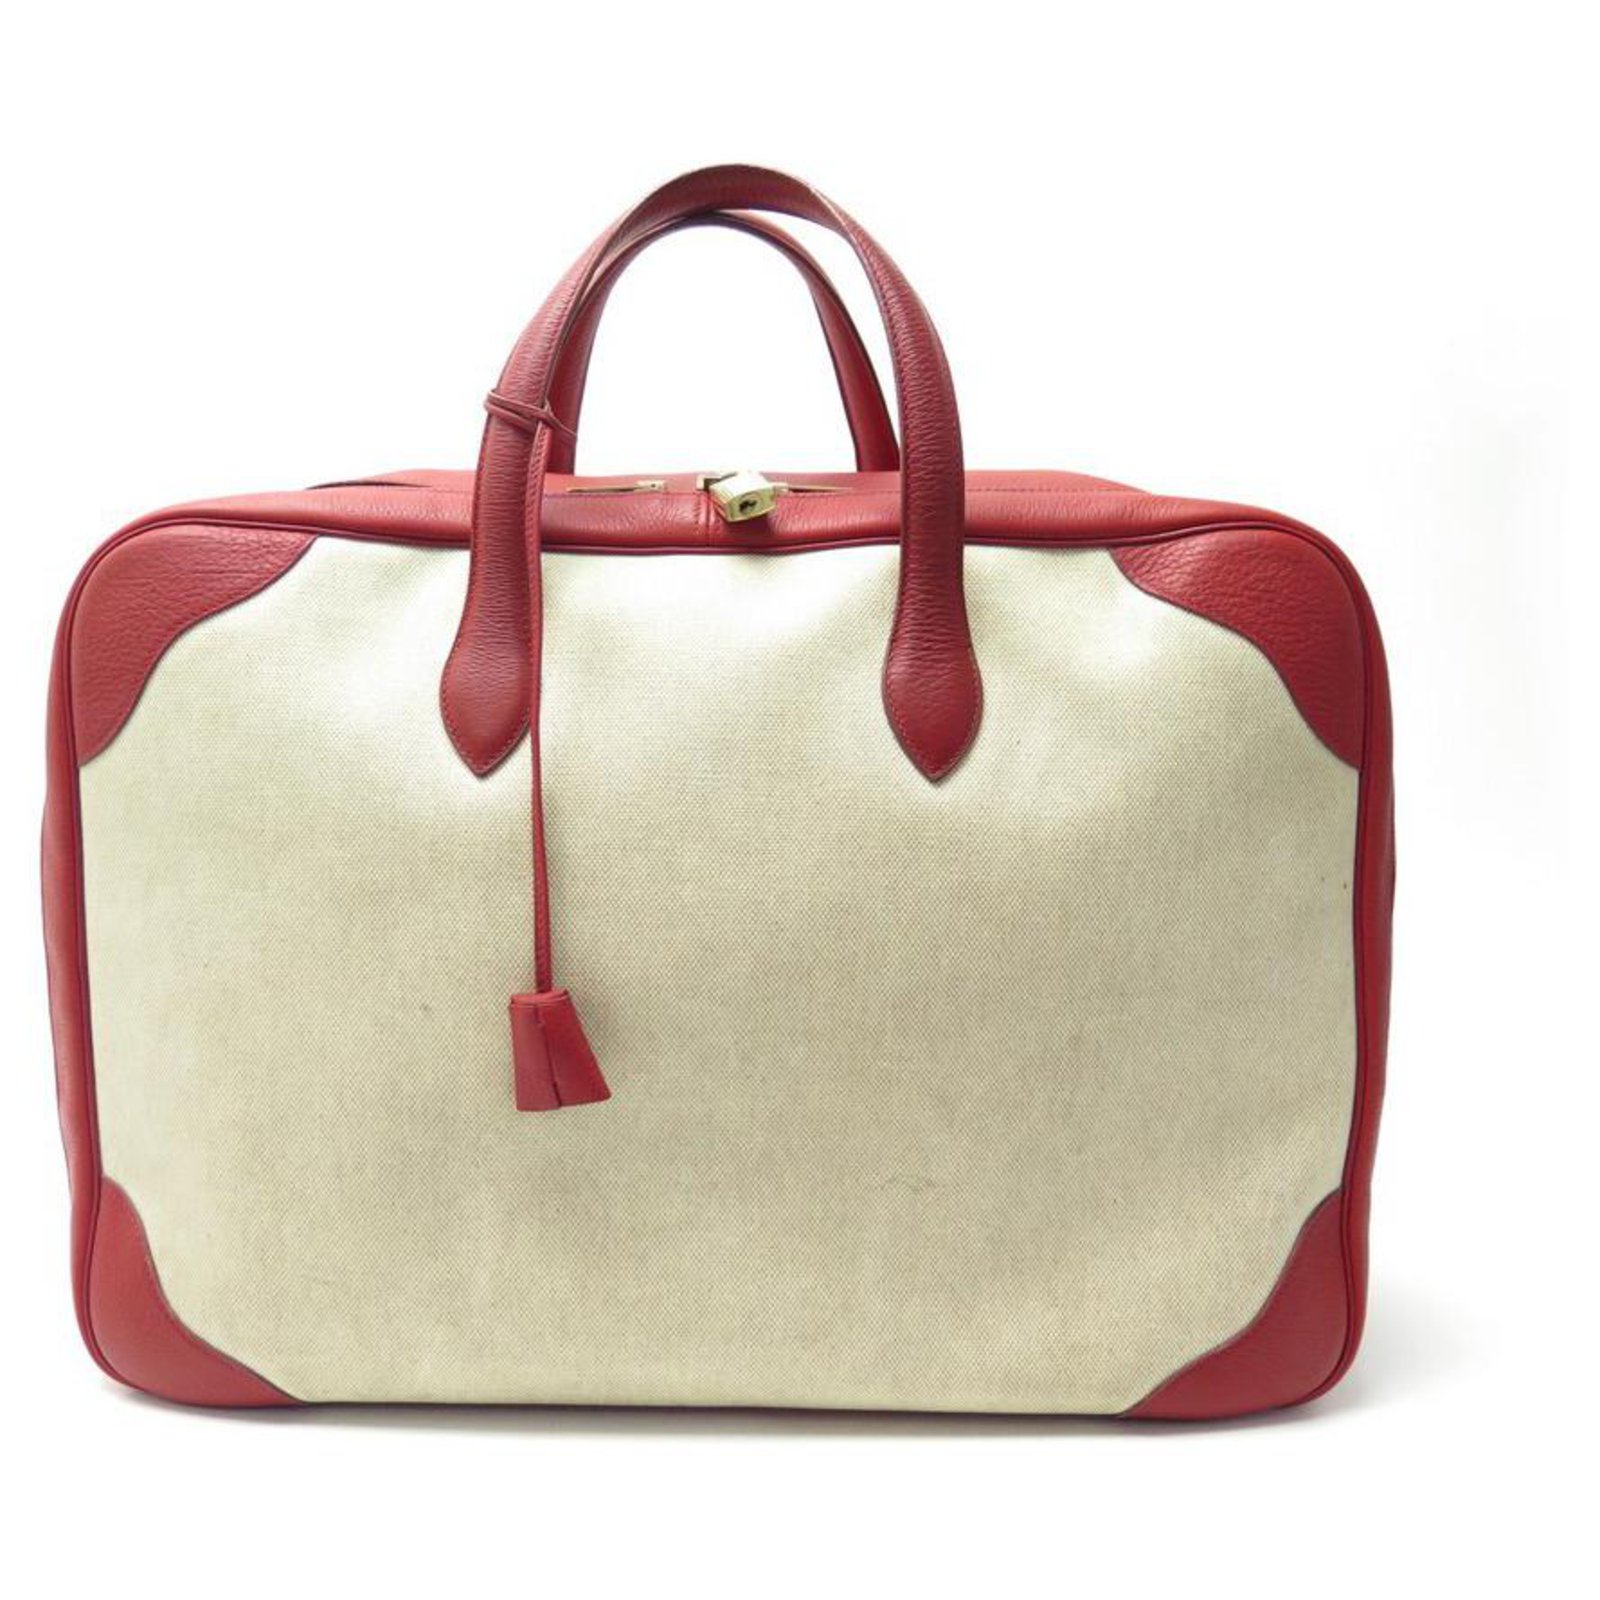 Travel bag perfection @hermes 😍